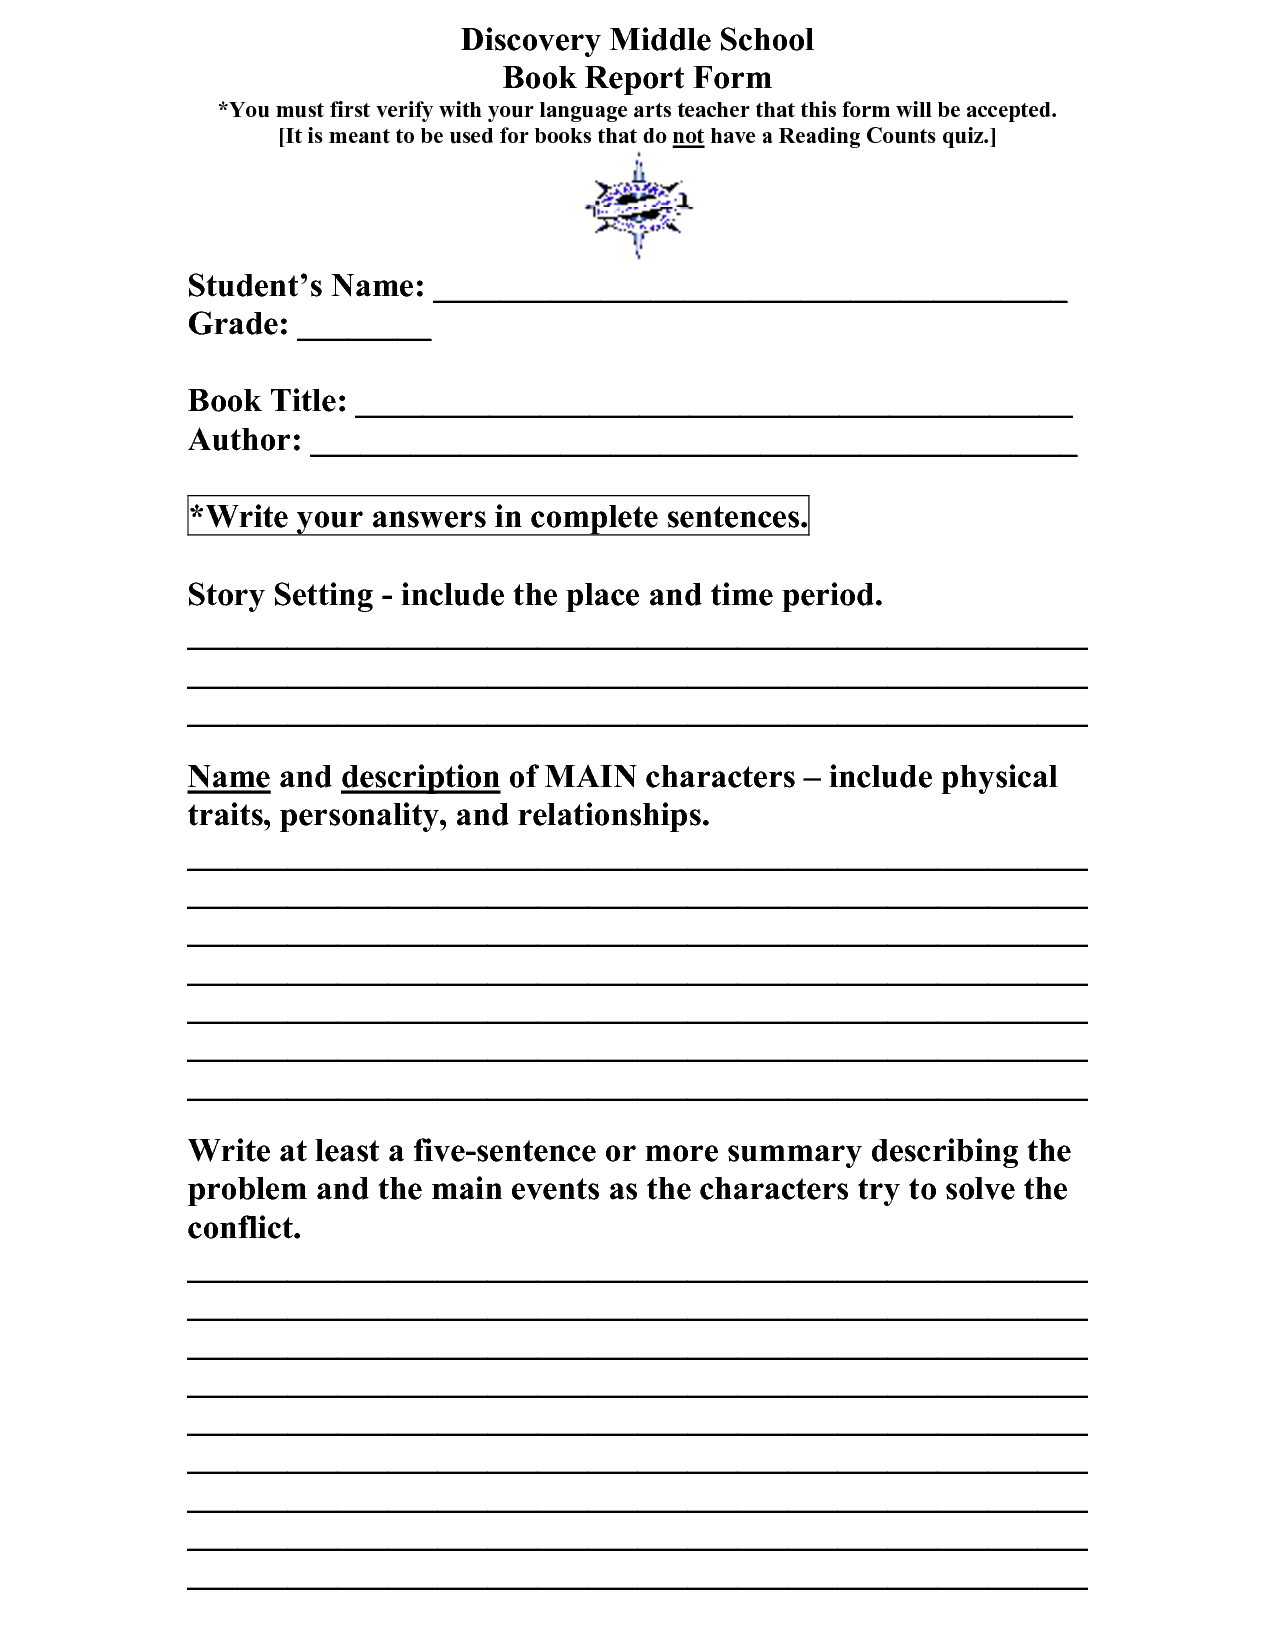 Middle school book report worksheet